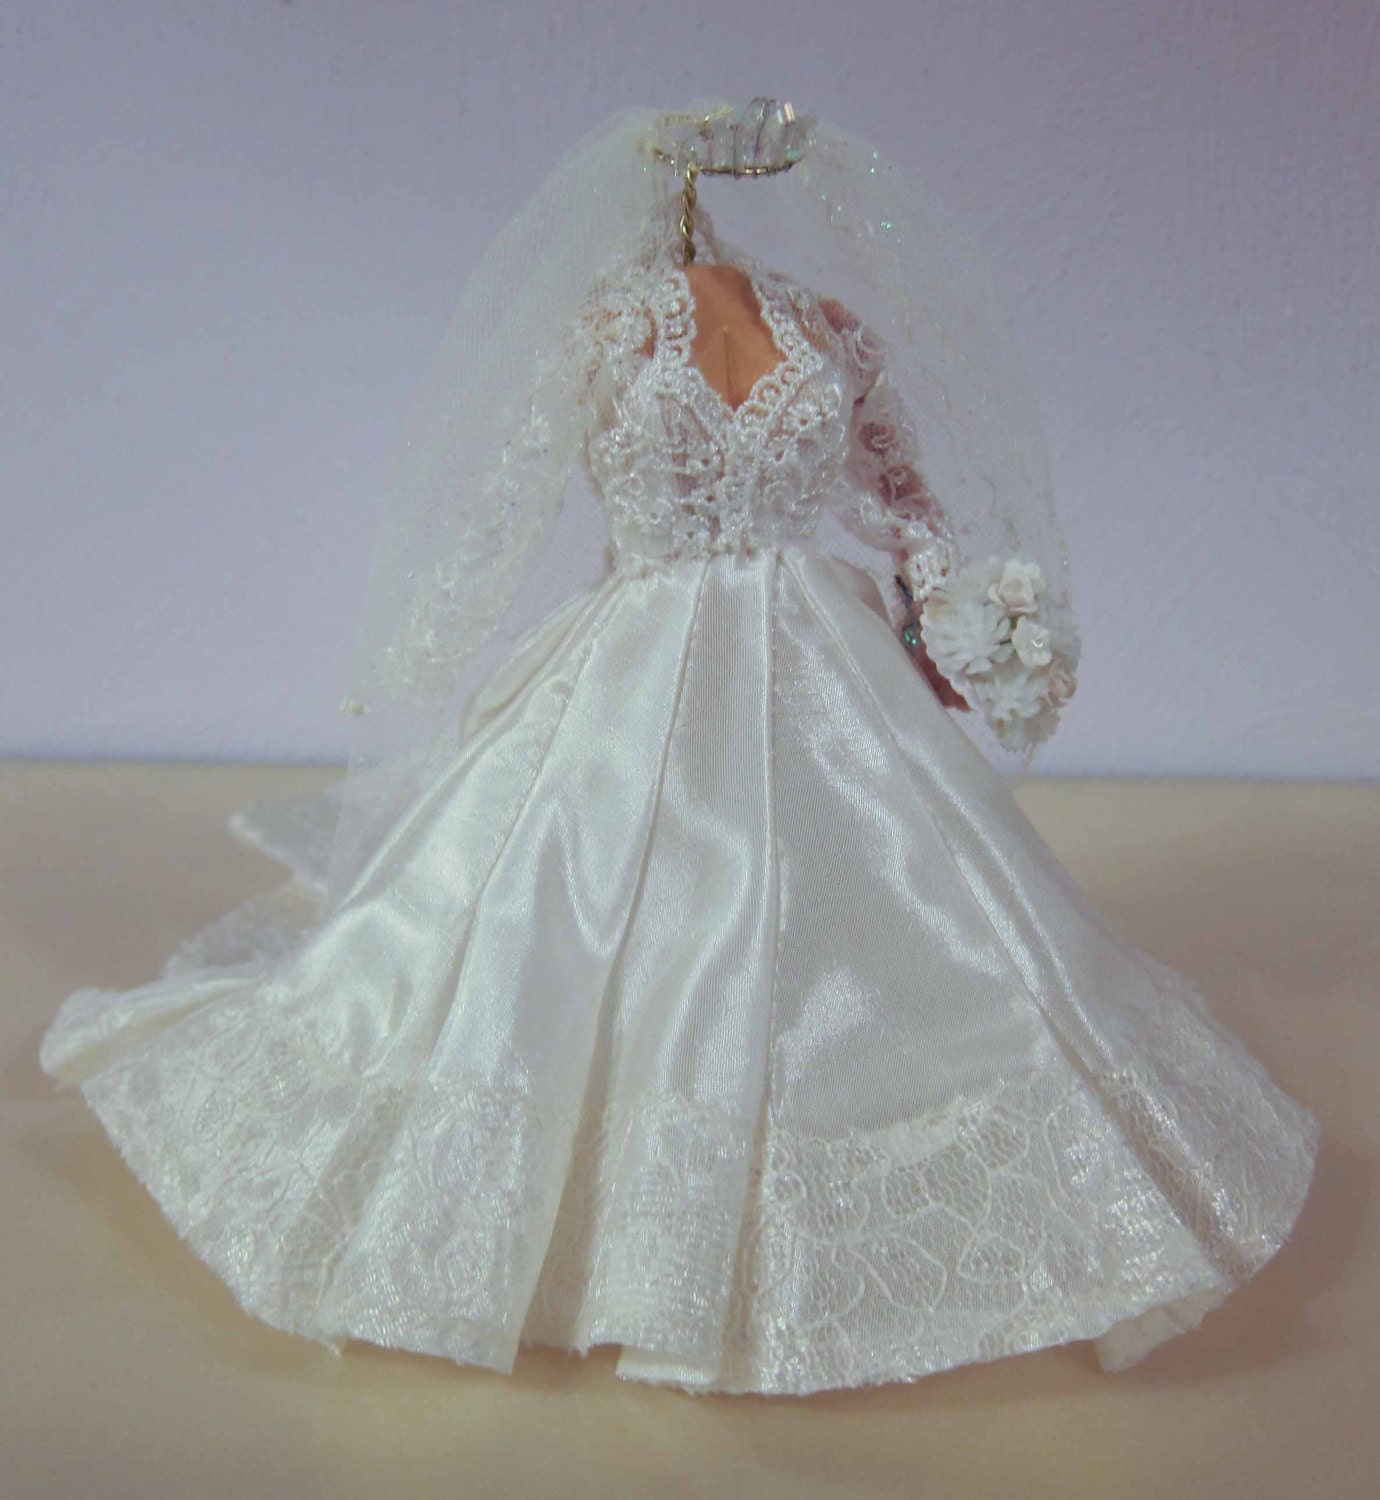 Dollhouse Miniature Bride Wedding Dress and Veil. ON SALE